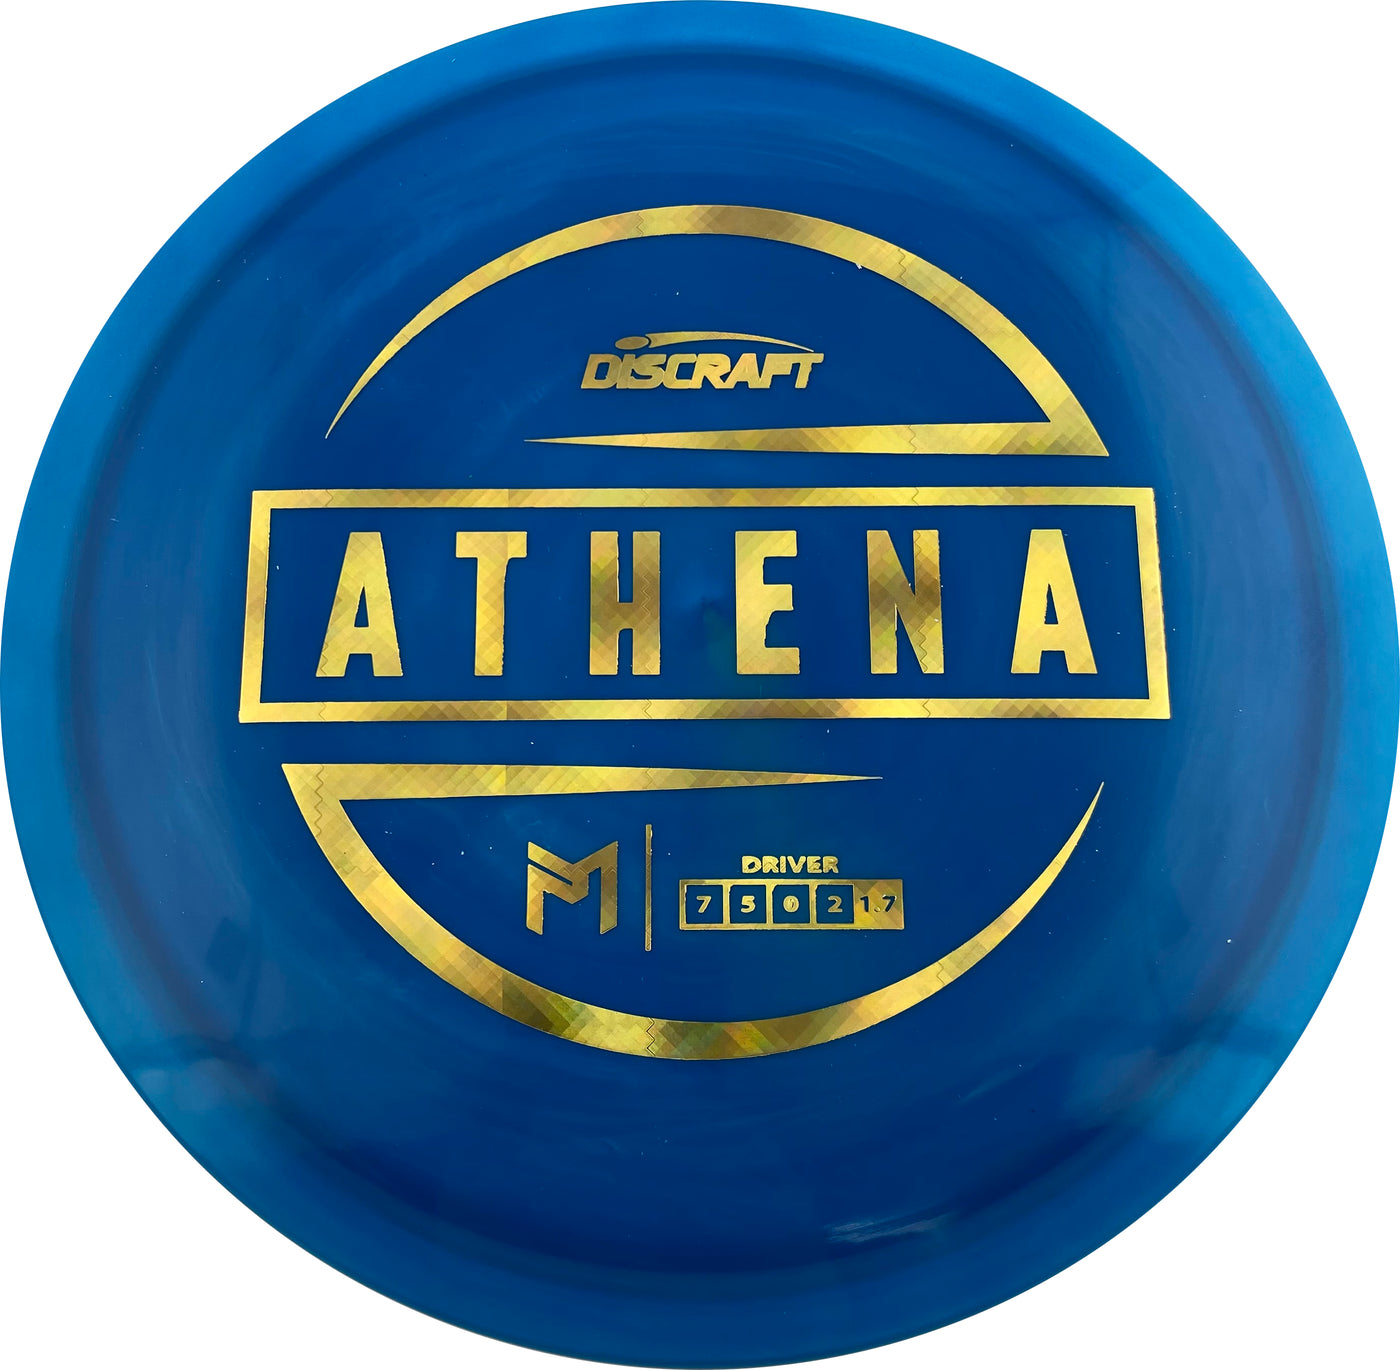 Discraft ESP Athena Fairway Driver with PM Logo Stock Stamp Stamp - Speed 7